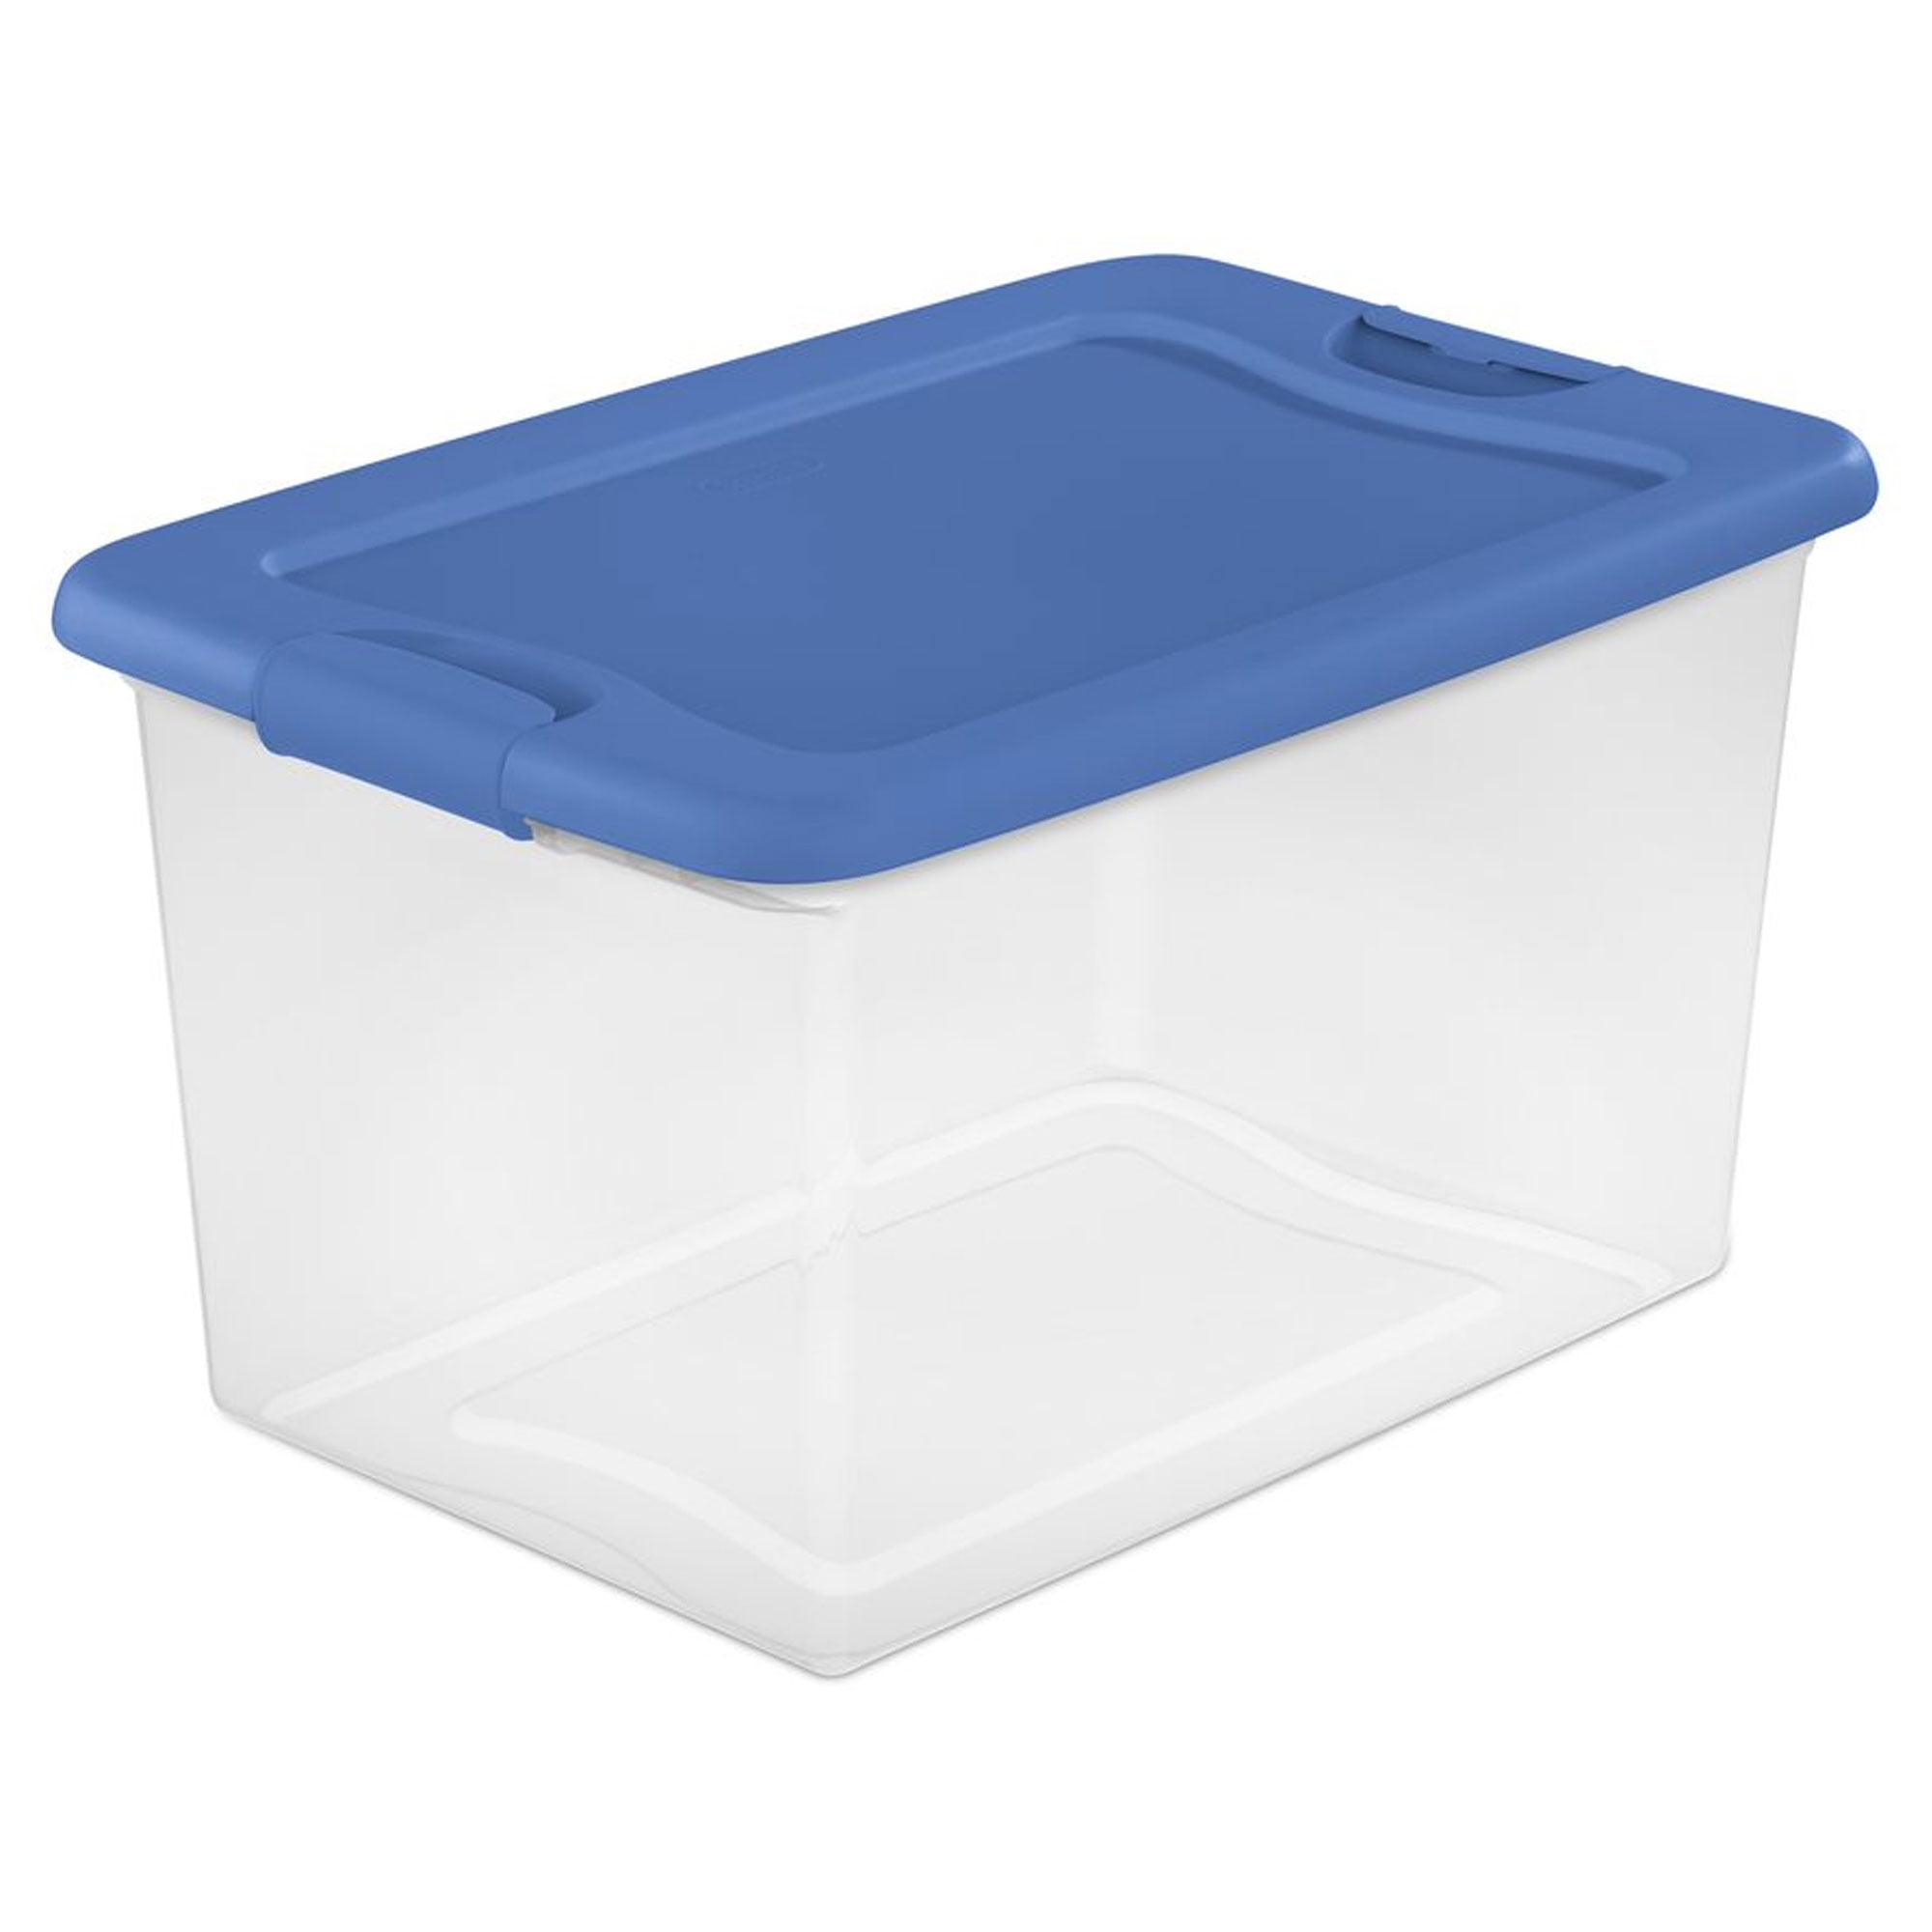 Sterilite 64 Quart Clear Plastic Latching Storage Container, Blue